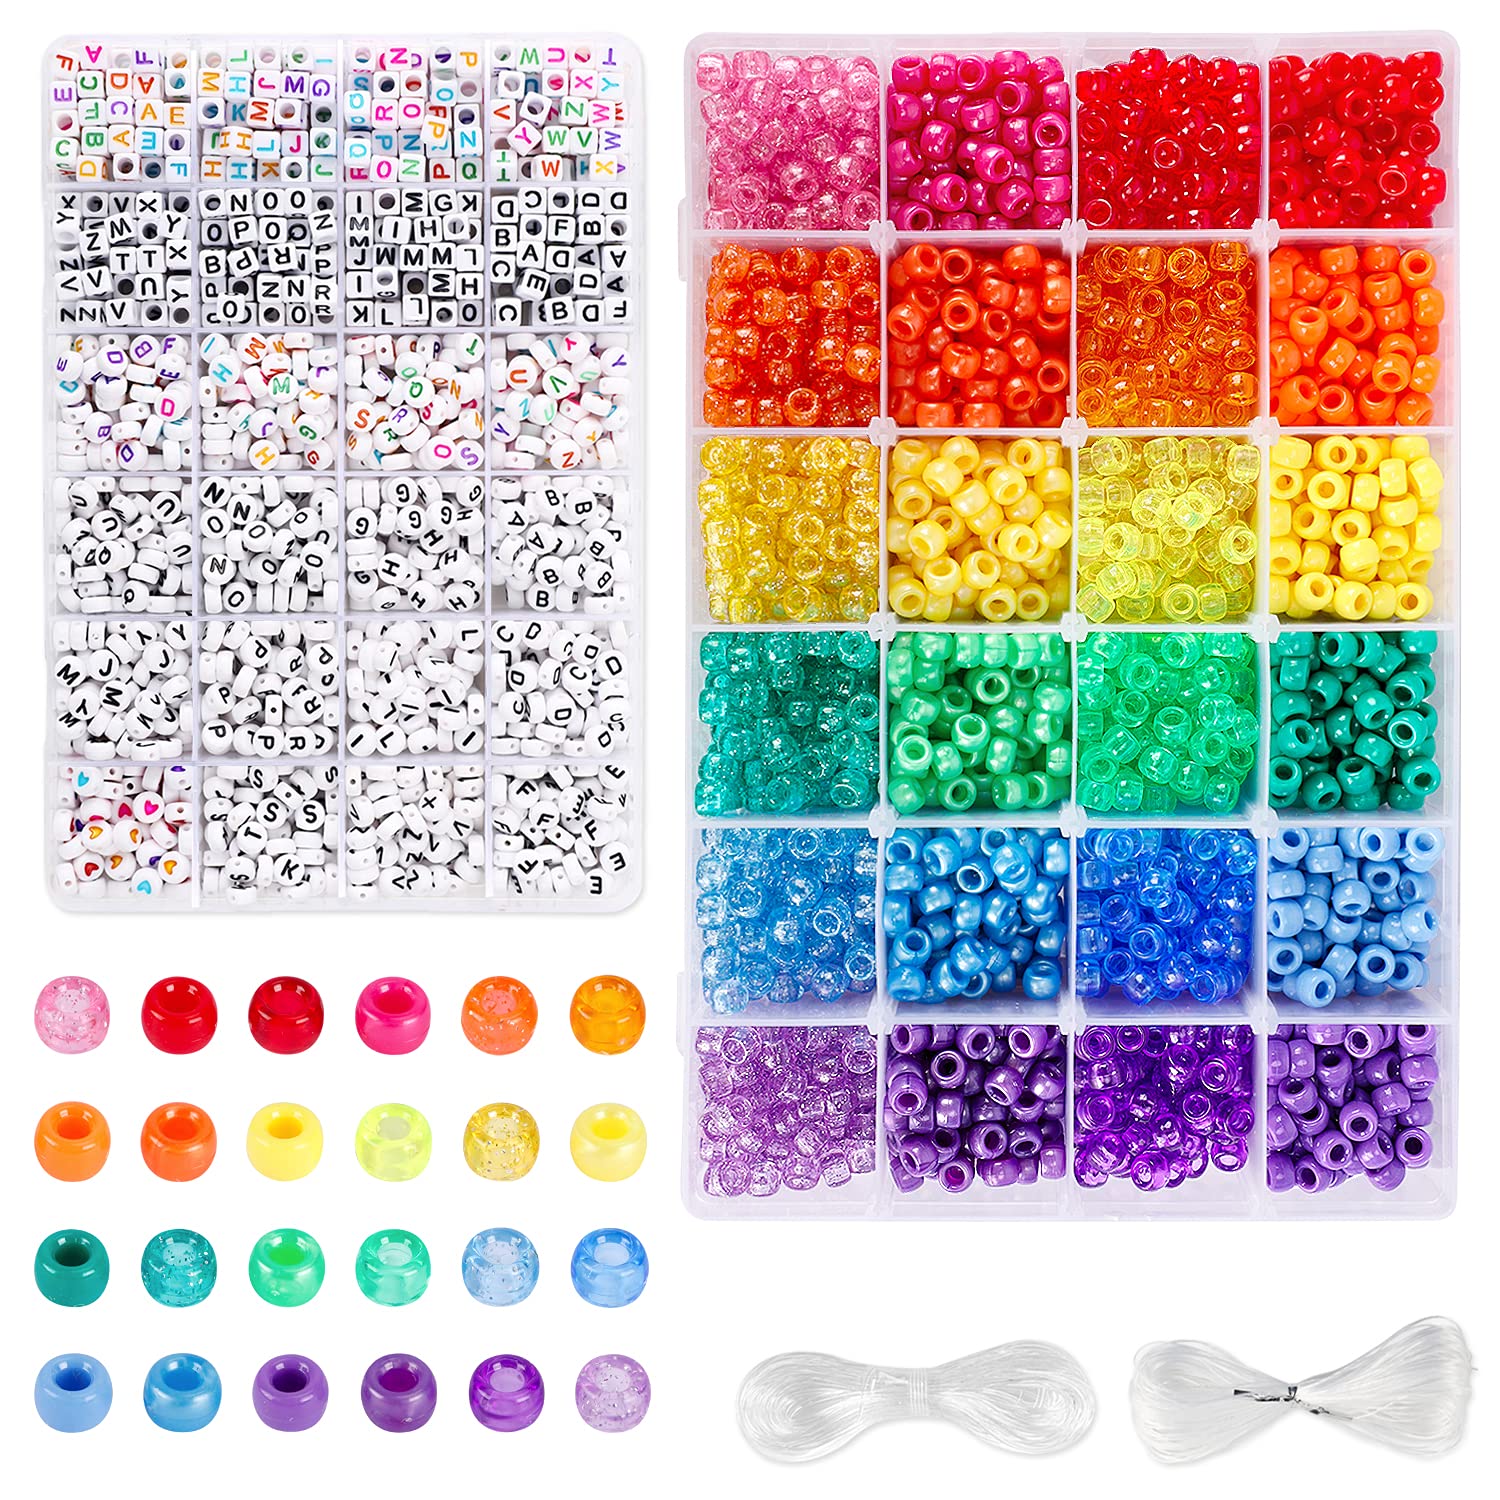 UOONY 4000pcs Pony Beads Kit, 2400pcs Rainbow Kandi Beads and 1600pcs  Letter Beads, 24 Colors Plastic